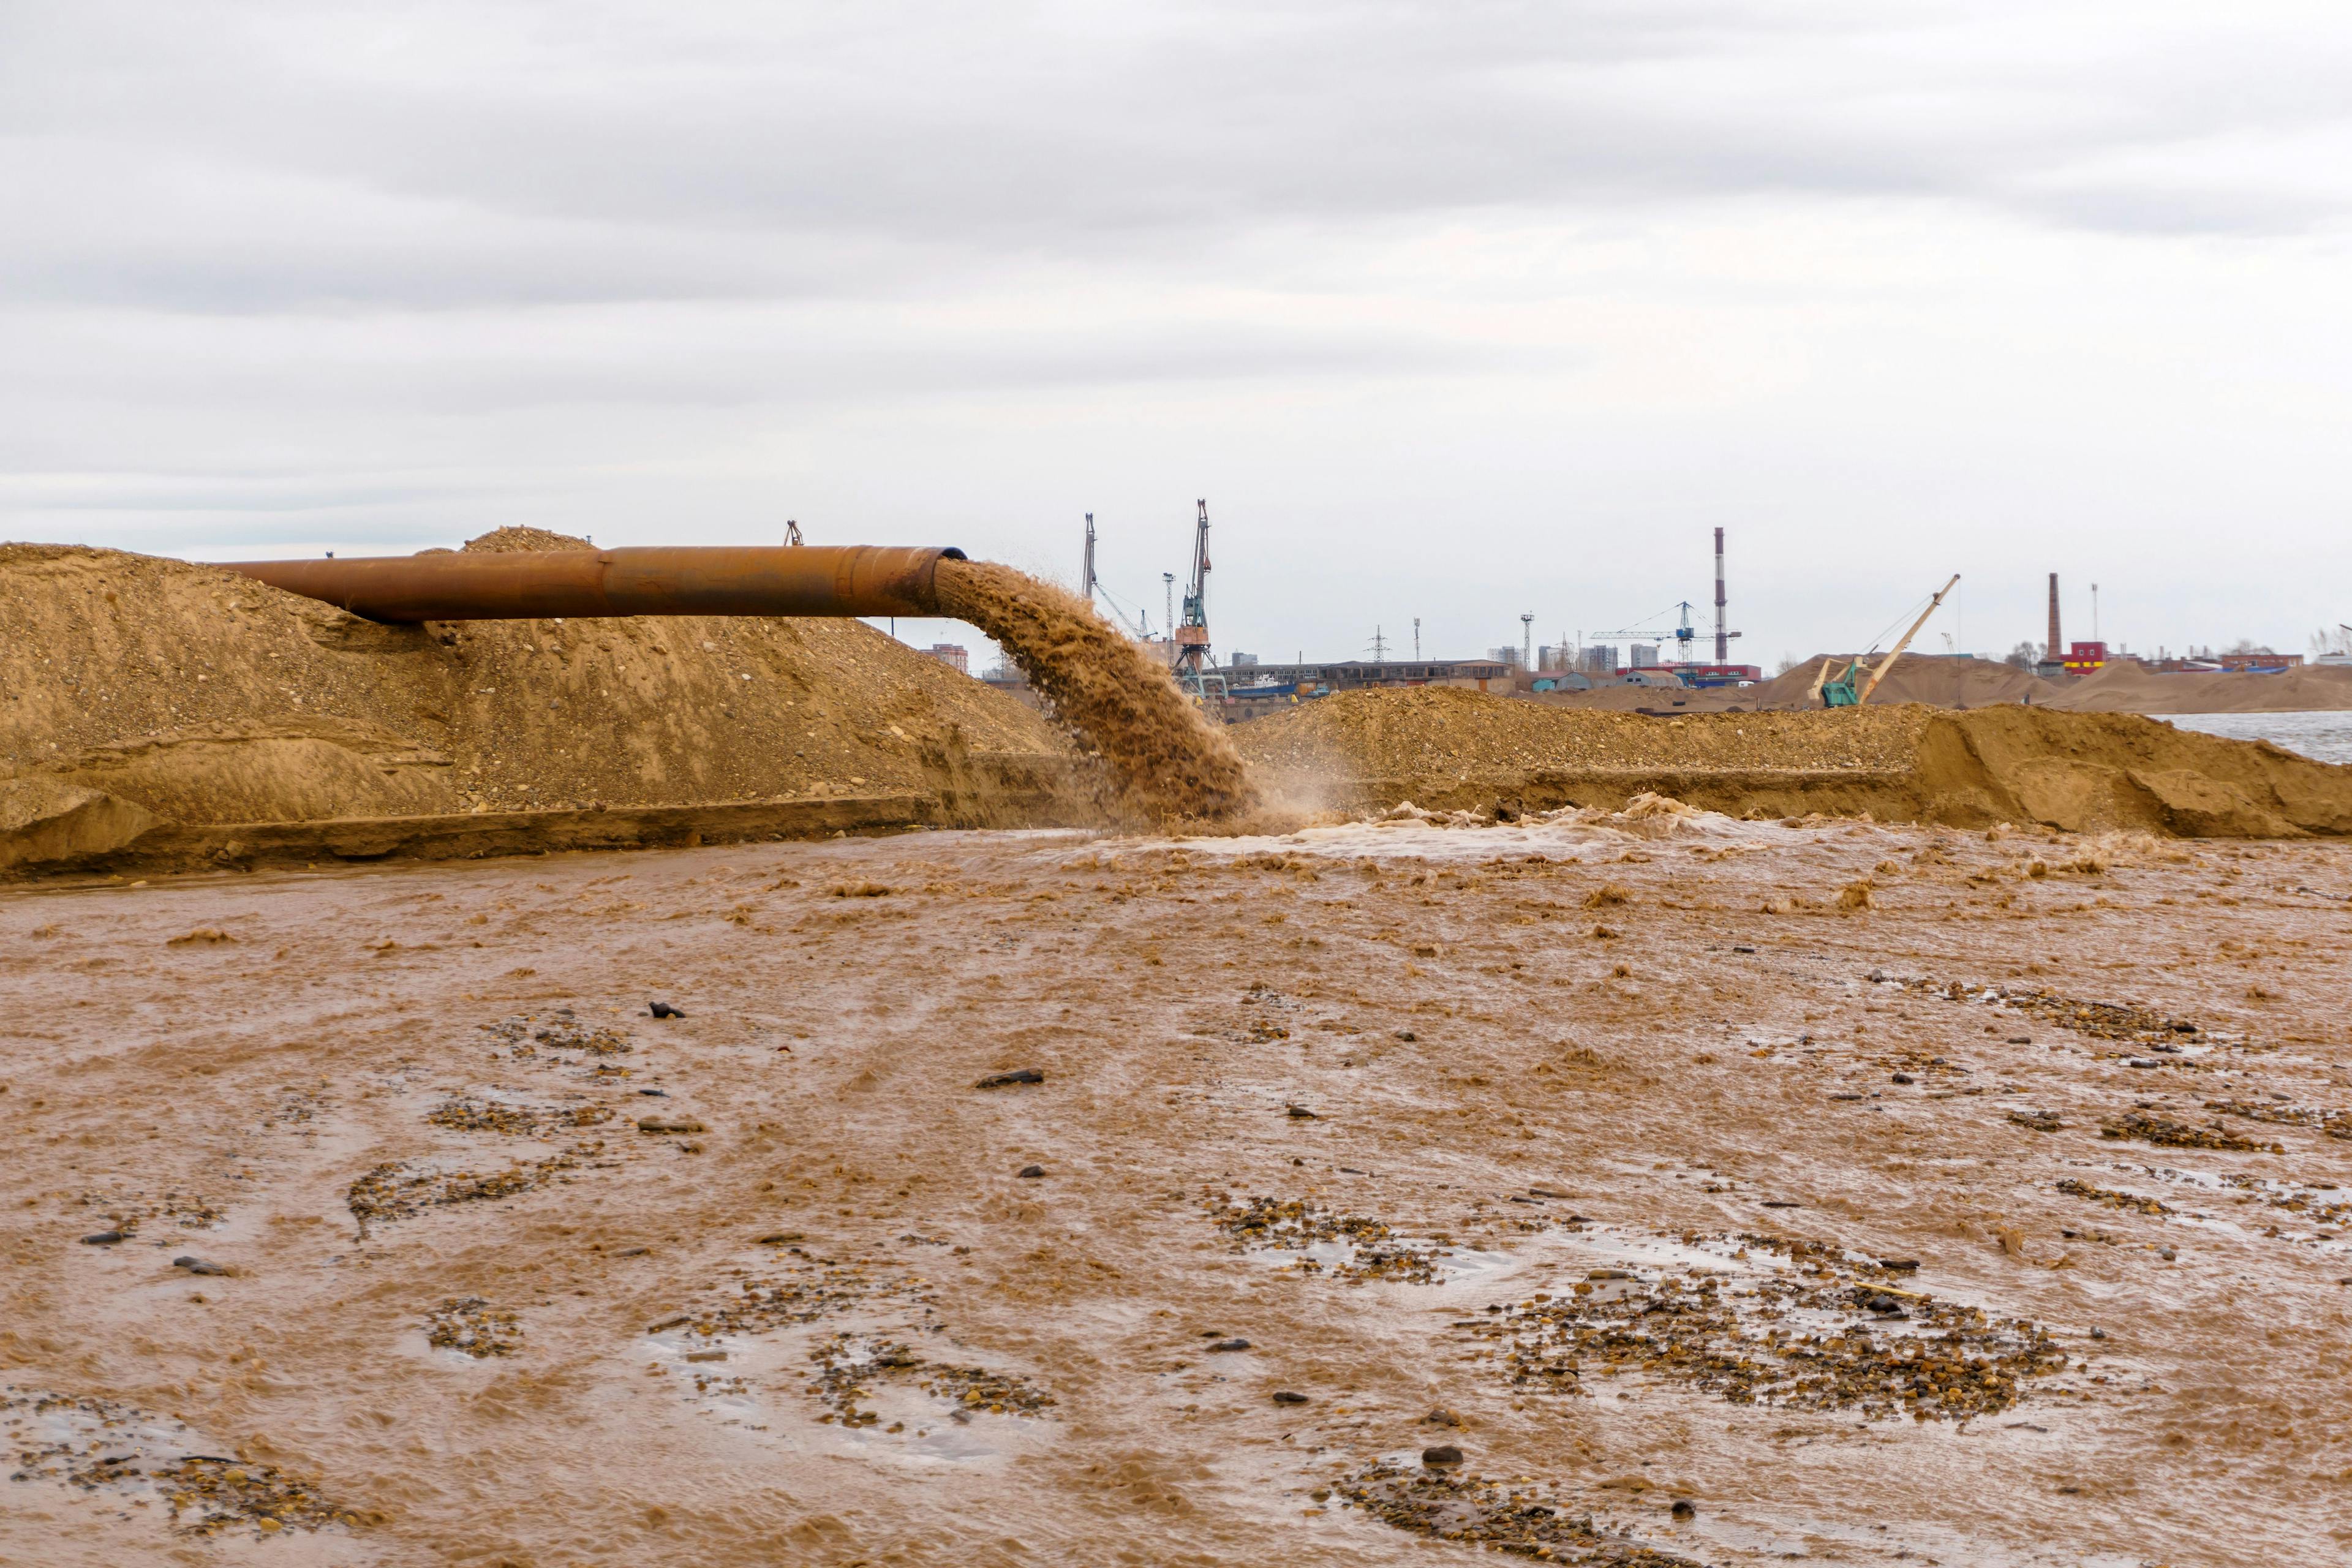 industrial slurry pipeline | Image Credit: © Evgeny - stock.adobe.com